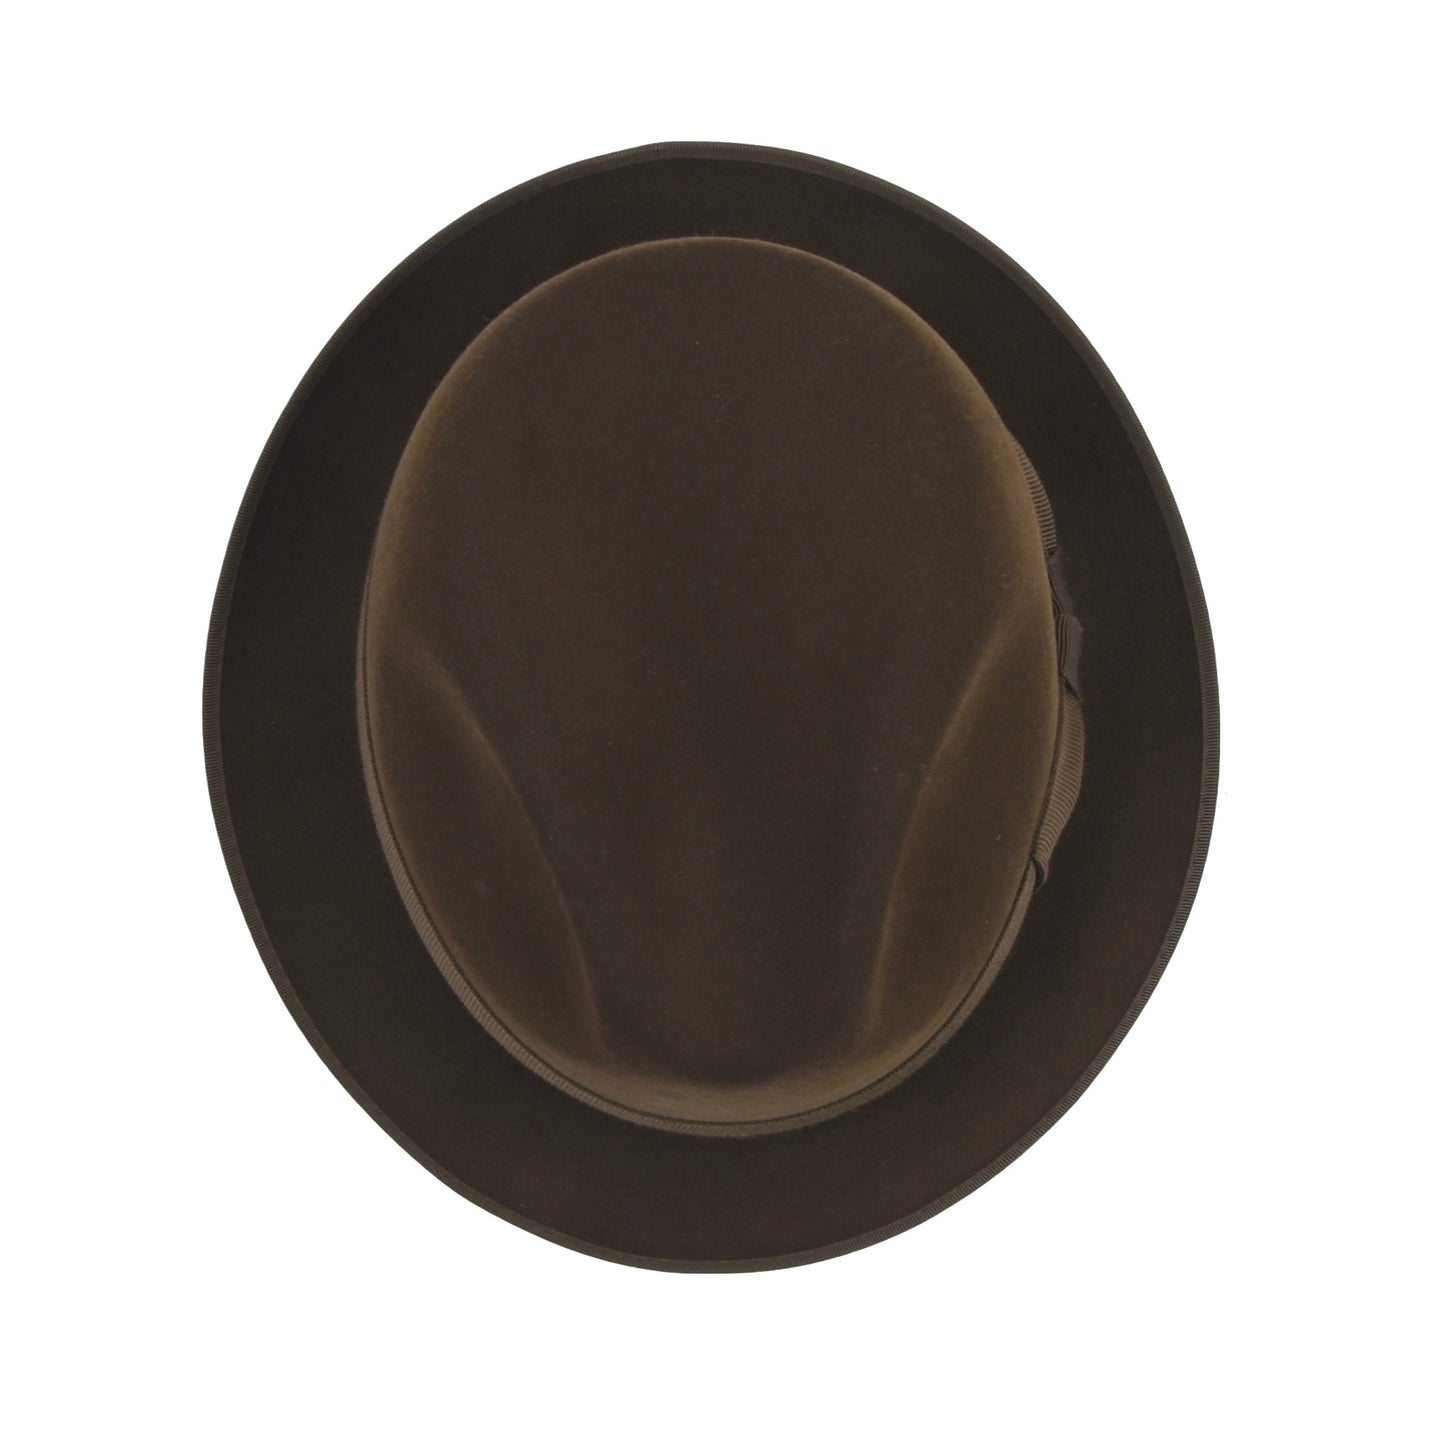 Vintage Hückel Felt Hat 4.8cm Brim Size 57 - Brown